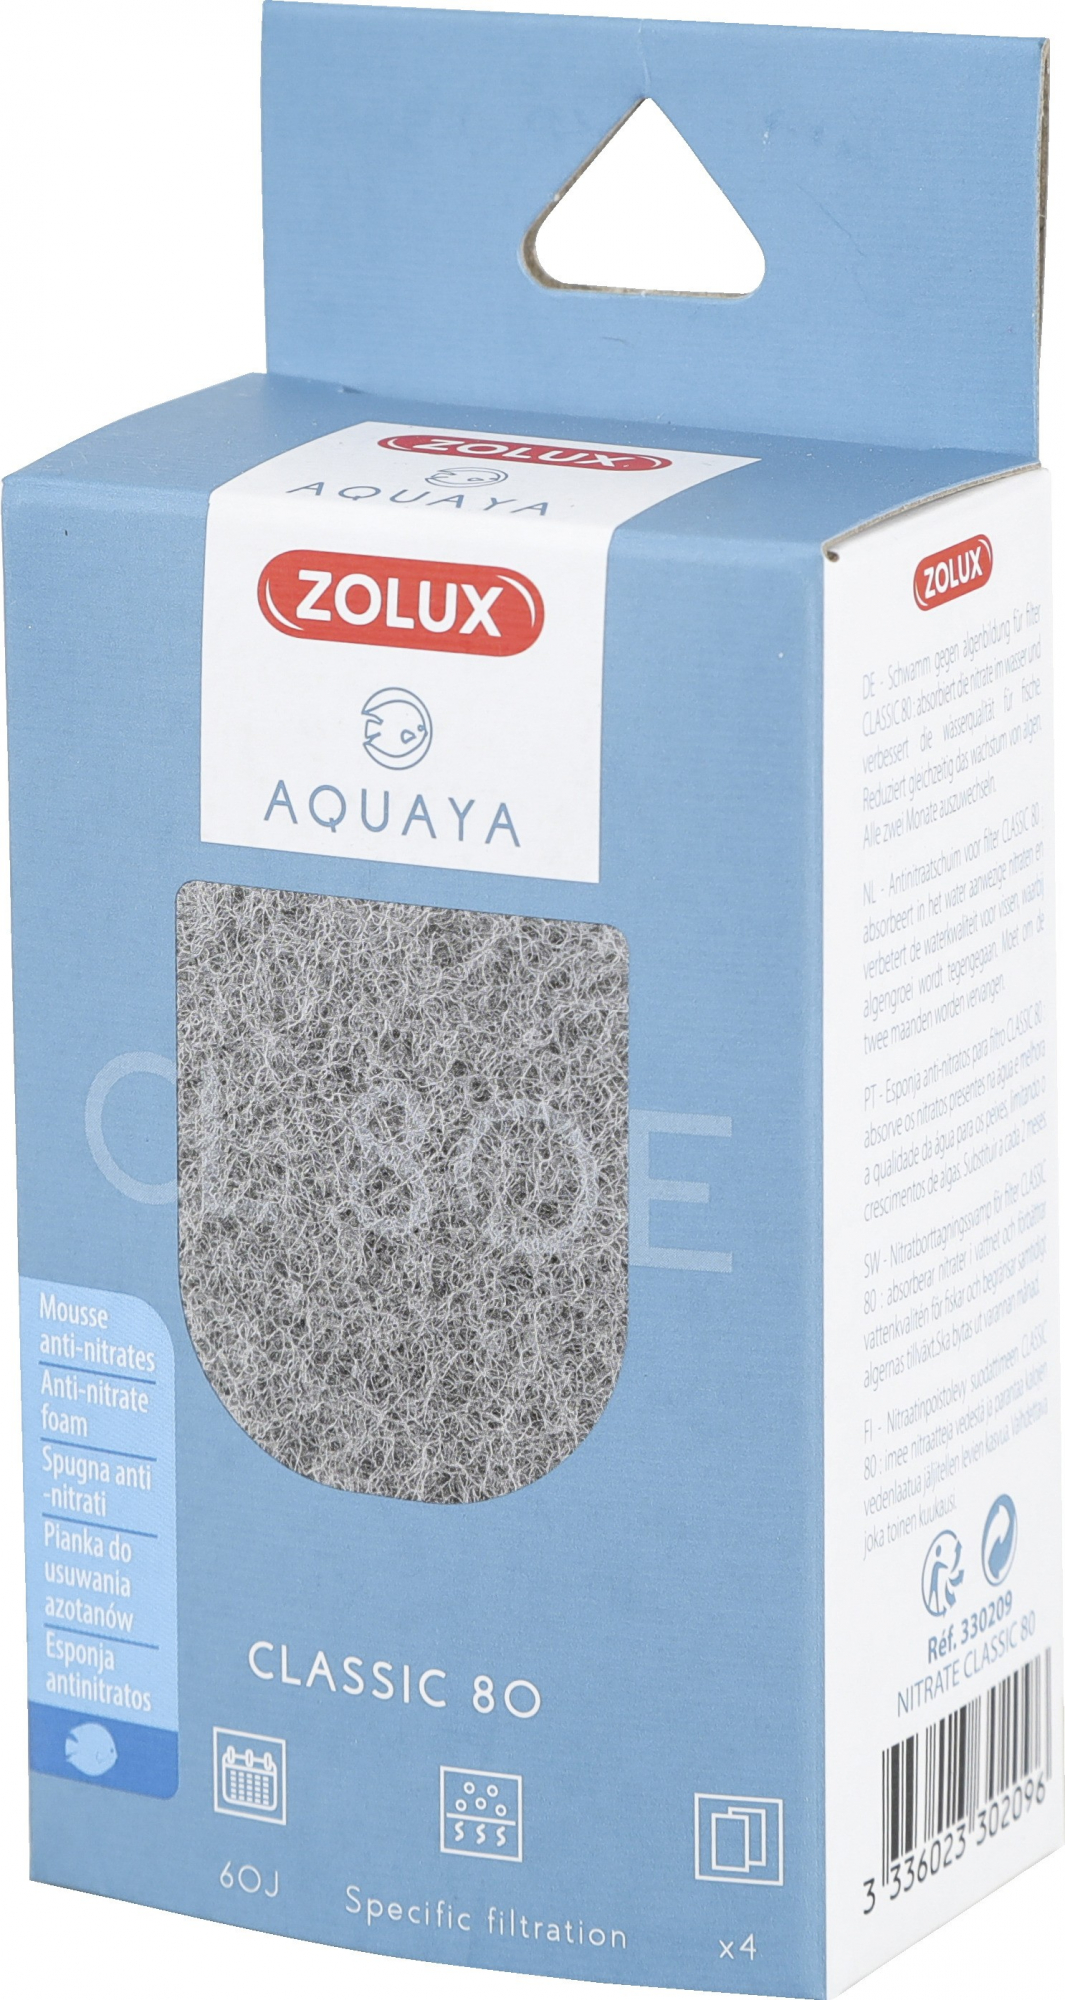 Espuma anti-nitrato para filtro Aquaya Classic